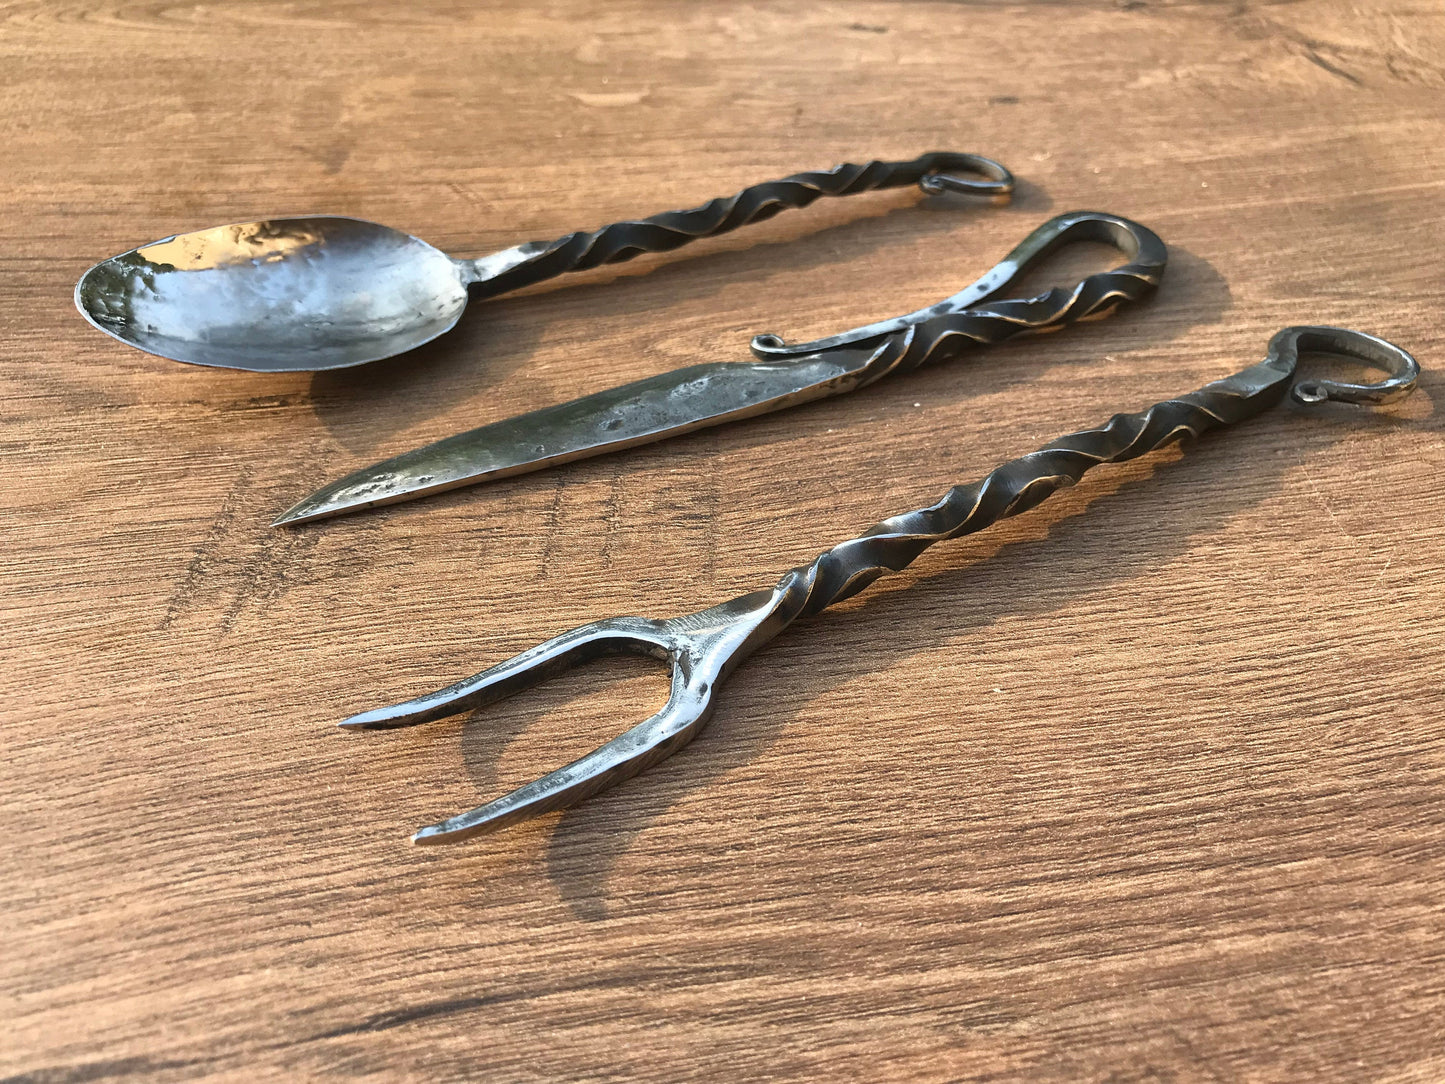 Cutlery set, stainless steel, steel gift, knife, spoon, fork, BBQ gift,BBQ fork,stainless steel gifts,grill tools, flatware,medieval cutlery